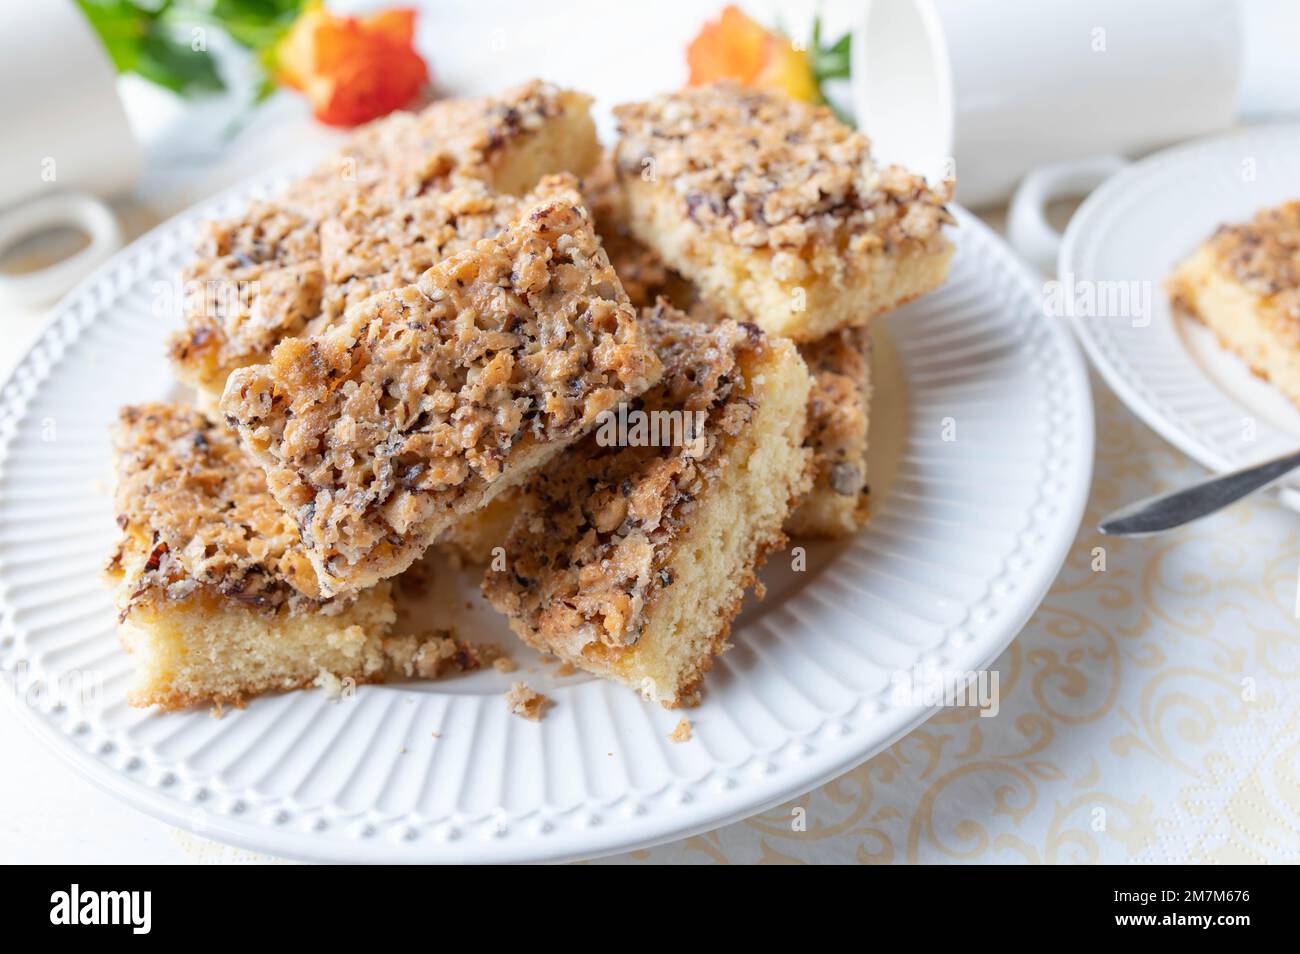 Plate with slices of hazelnut cake on white background Stock Photo